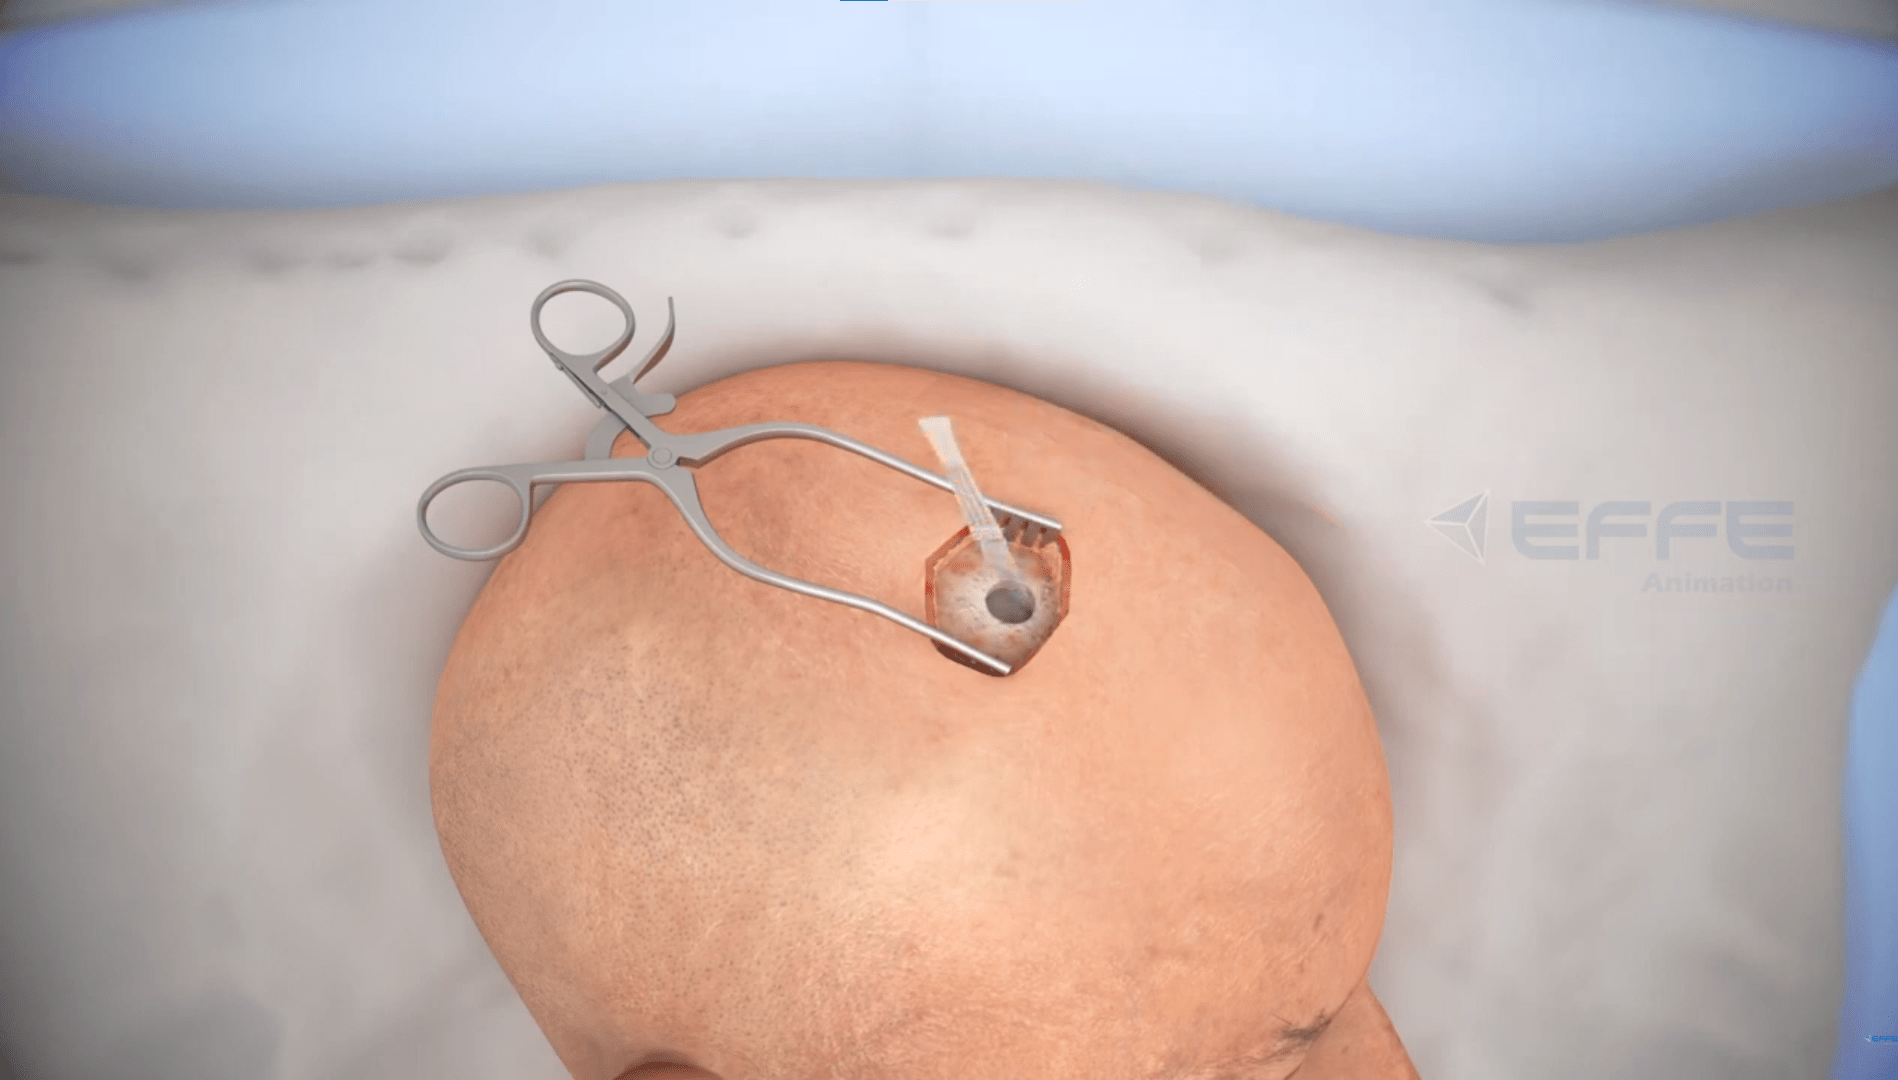 3D Brain Surgery Animation Video